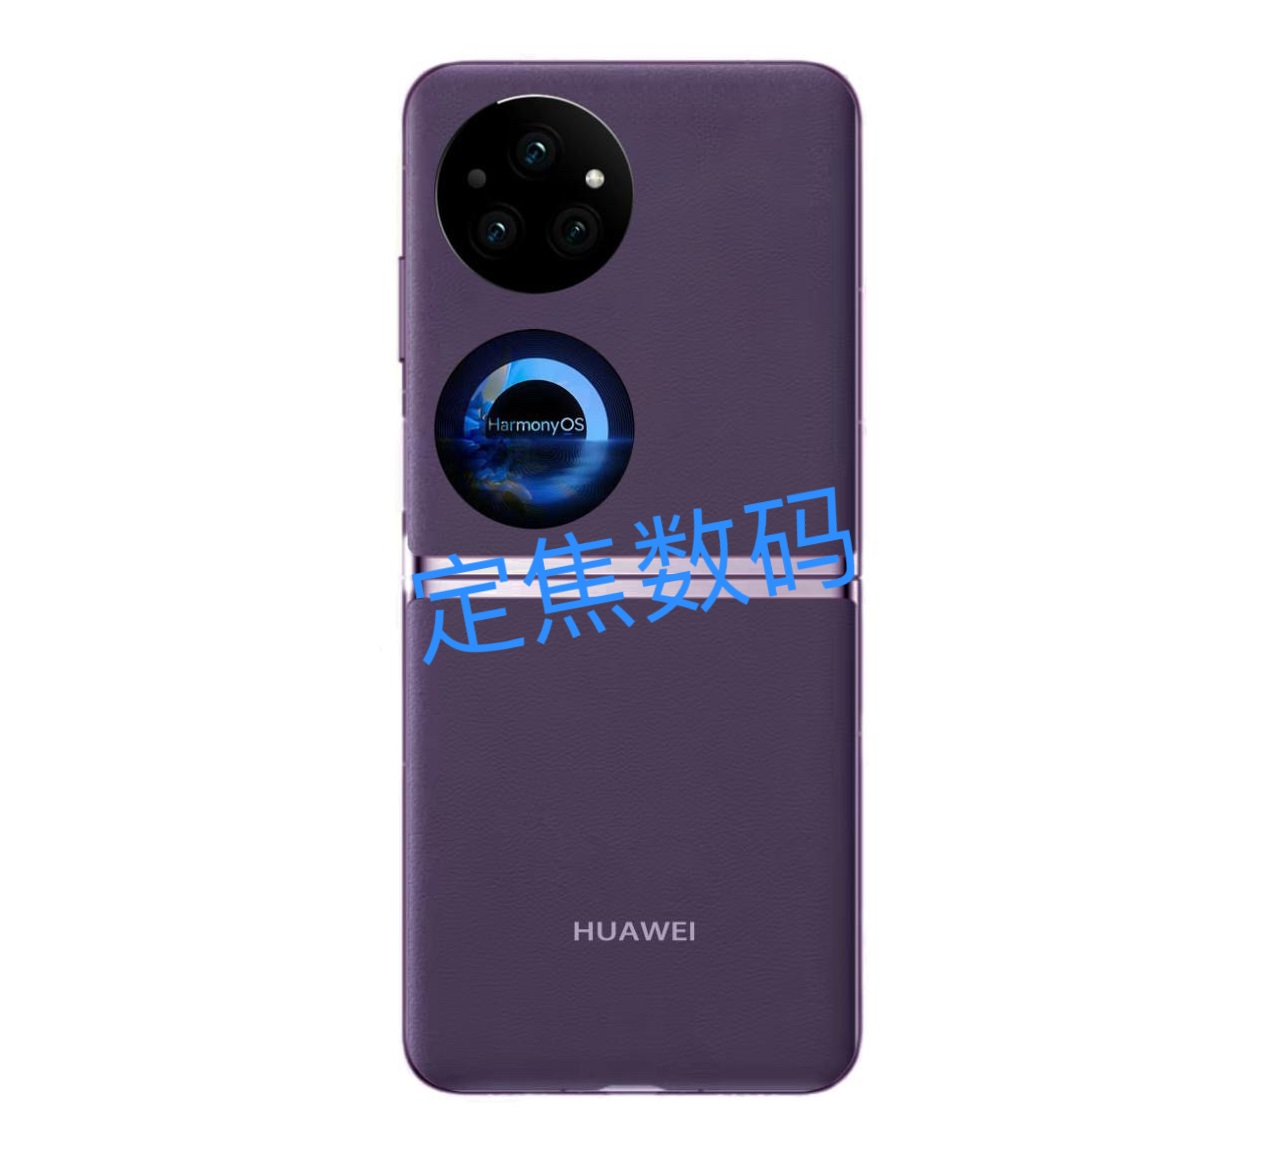 складной смартфон Huawei Pocket S2